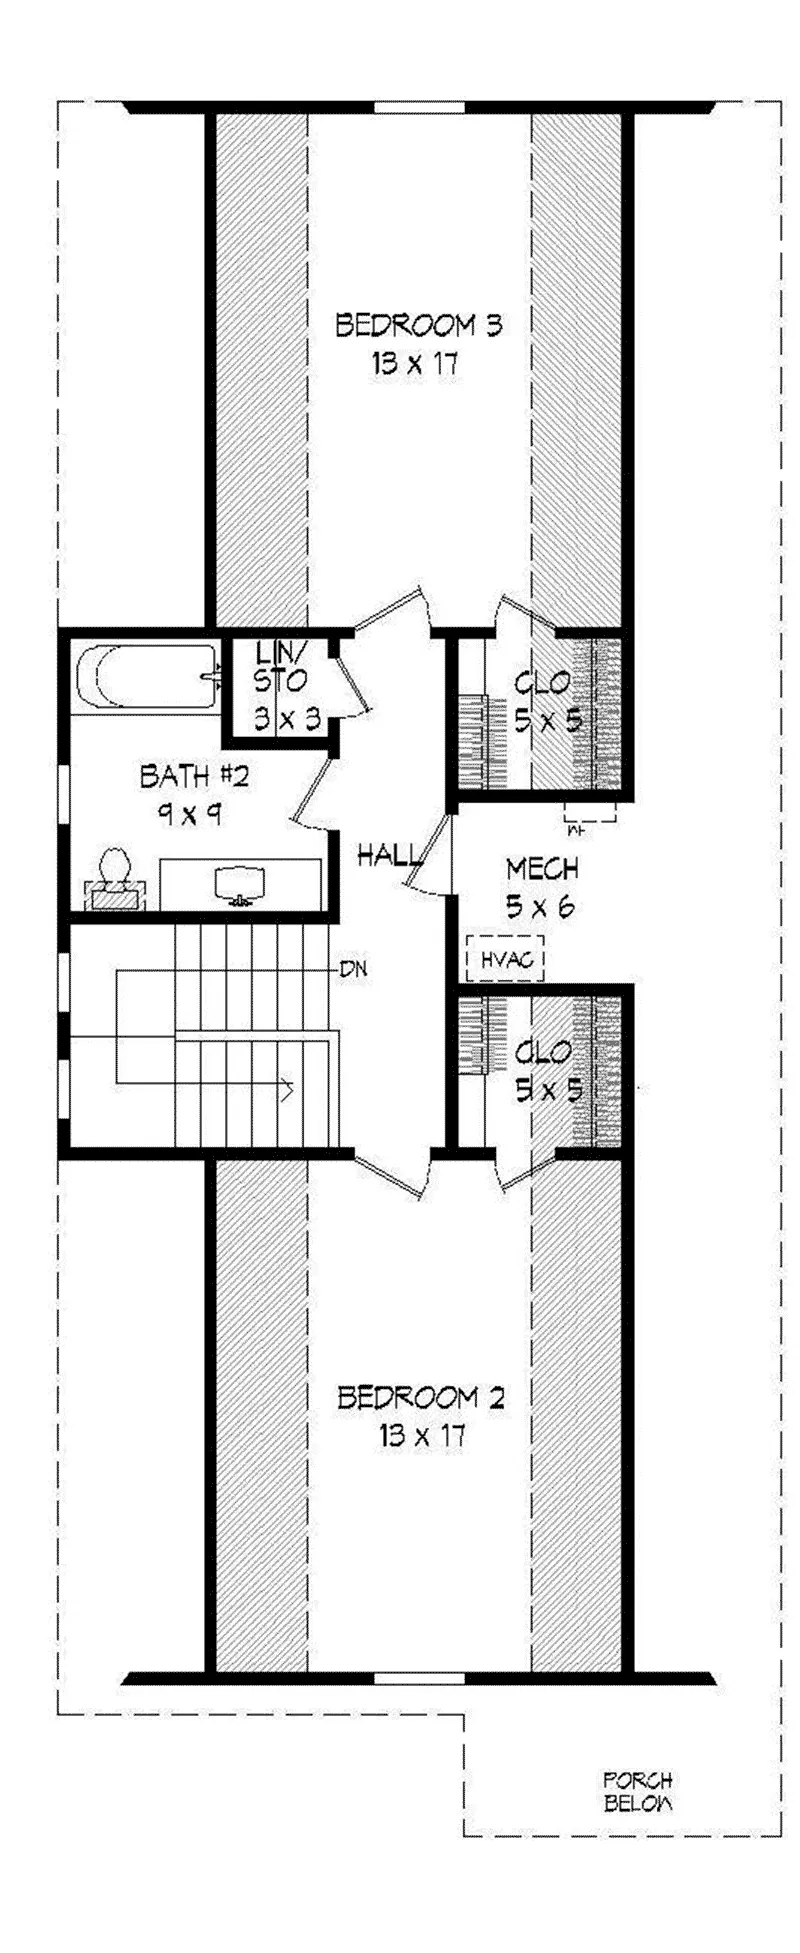 Bungalow House Plan Second Floor - Sunnen Craftsman Home 141D-0017 - Shop House Plans and More